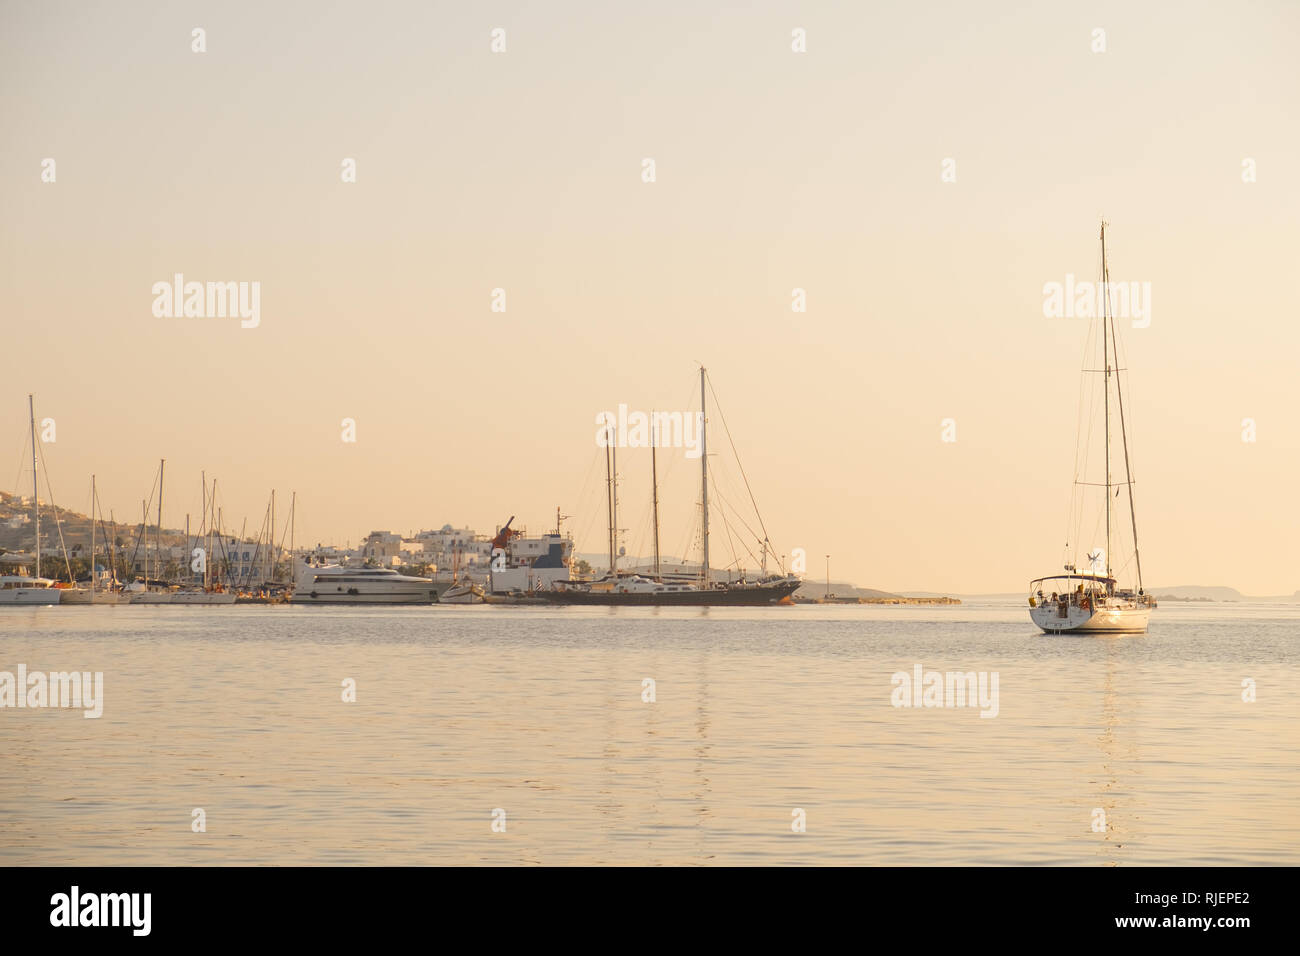 Yachts and boats in sunset near Parikia port, Paros island, Greece Stock Photo